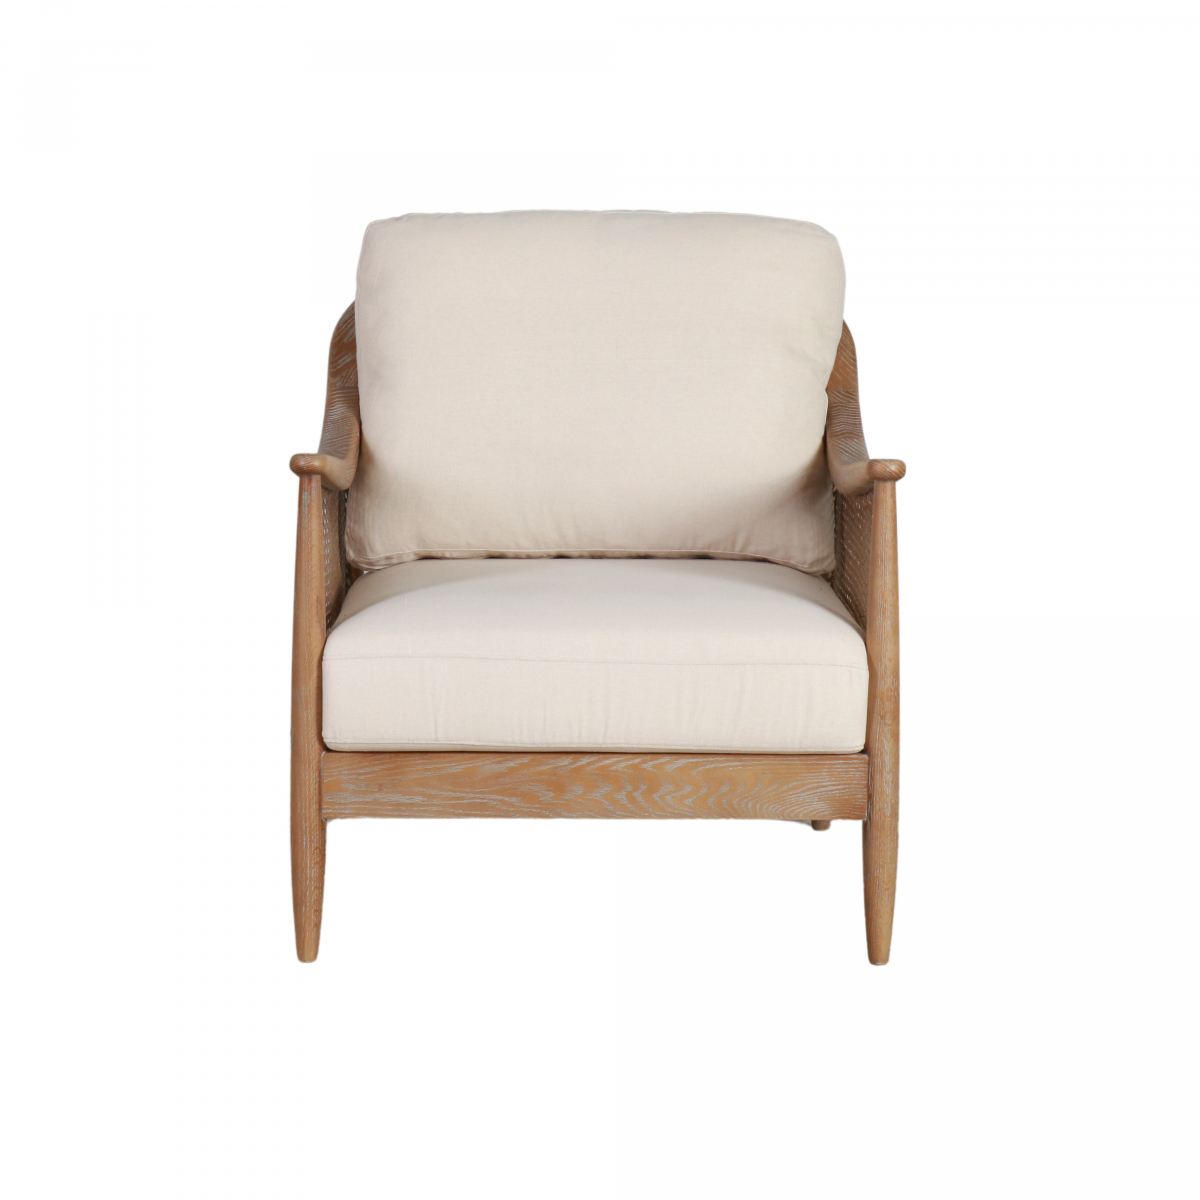 Modern armchair with rattan inlay on arm